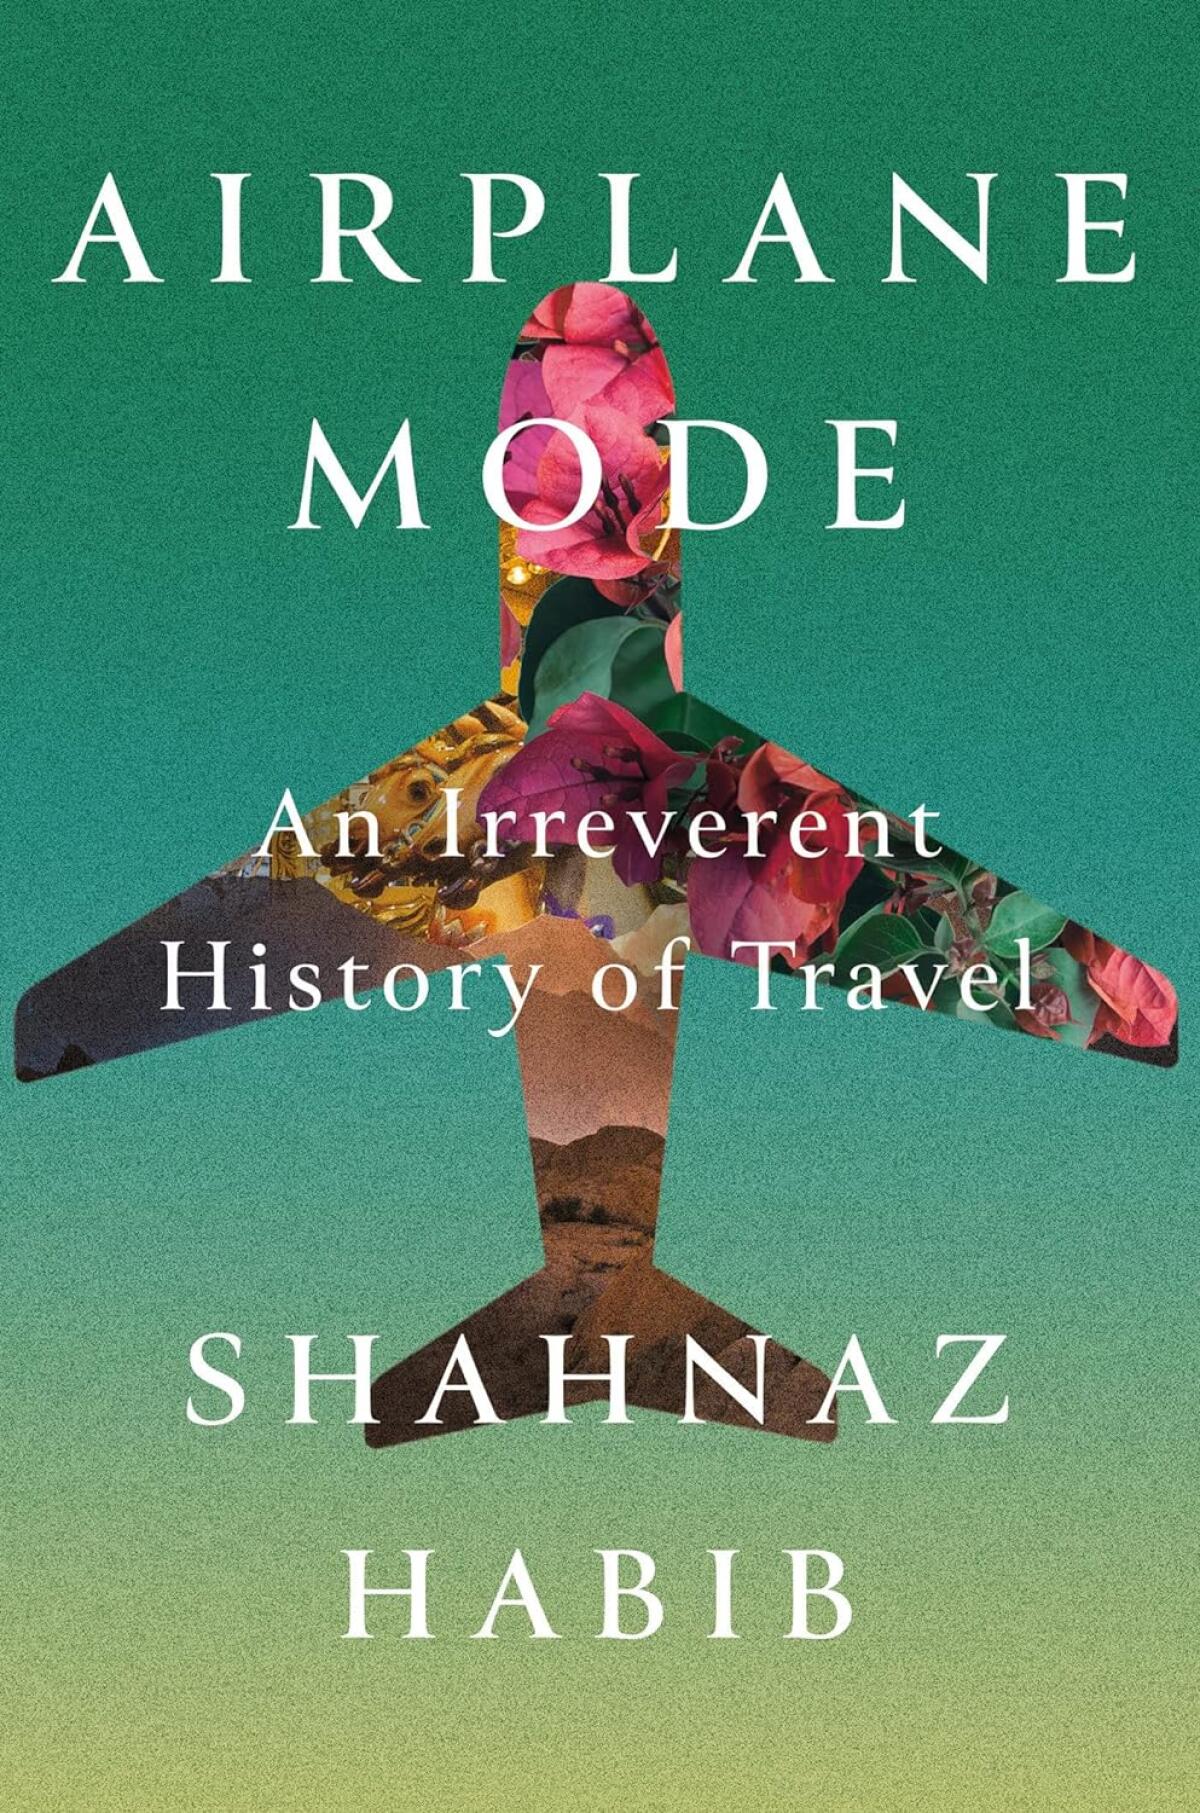 "Airplane Mode" by Shahnaz Habib